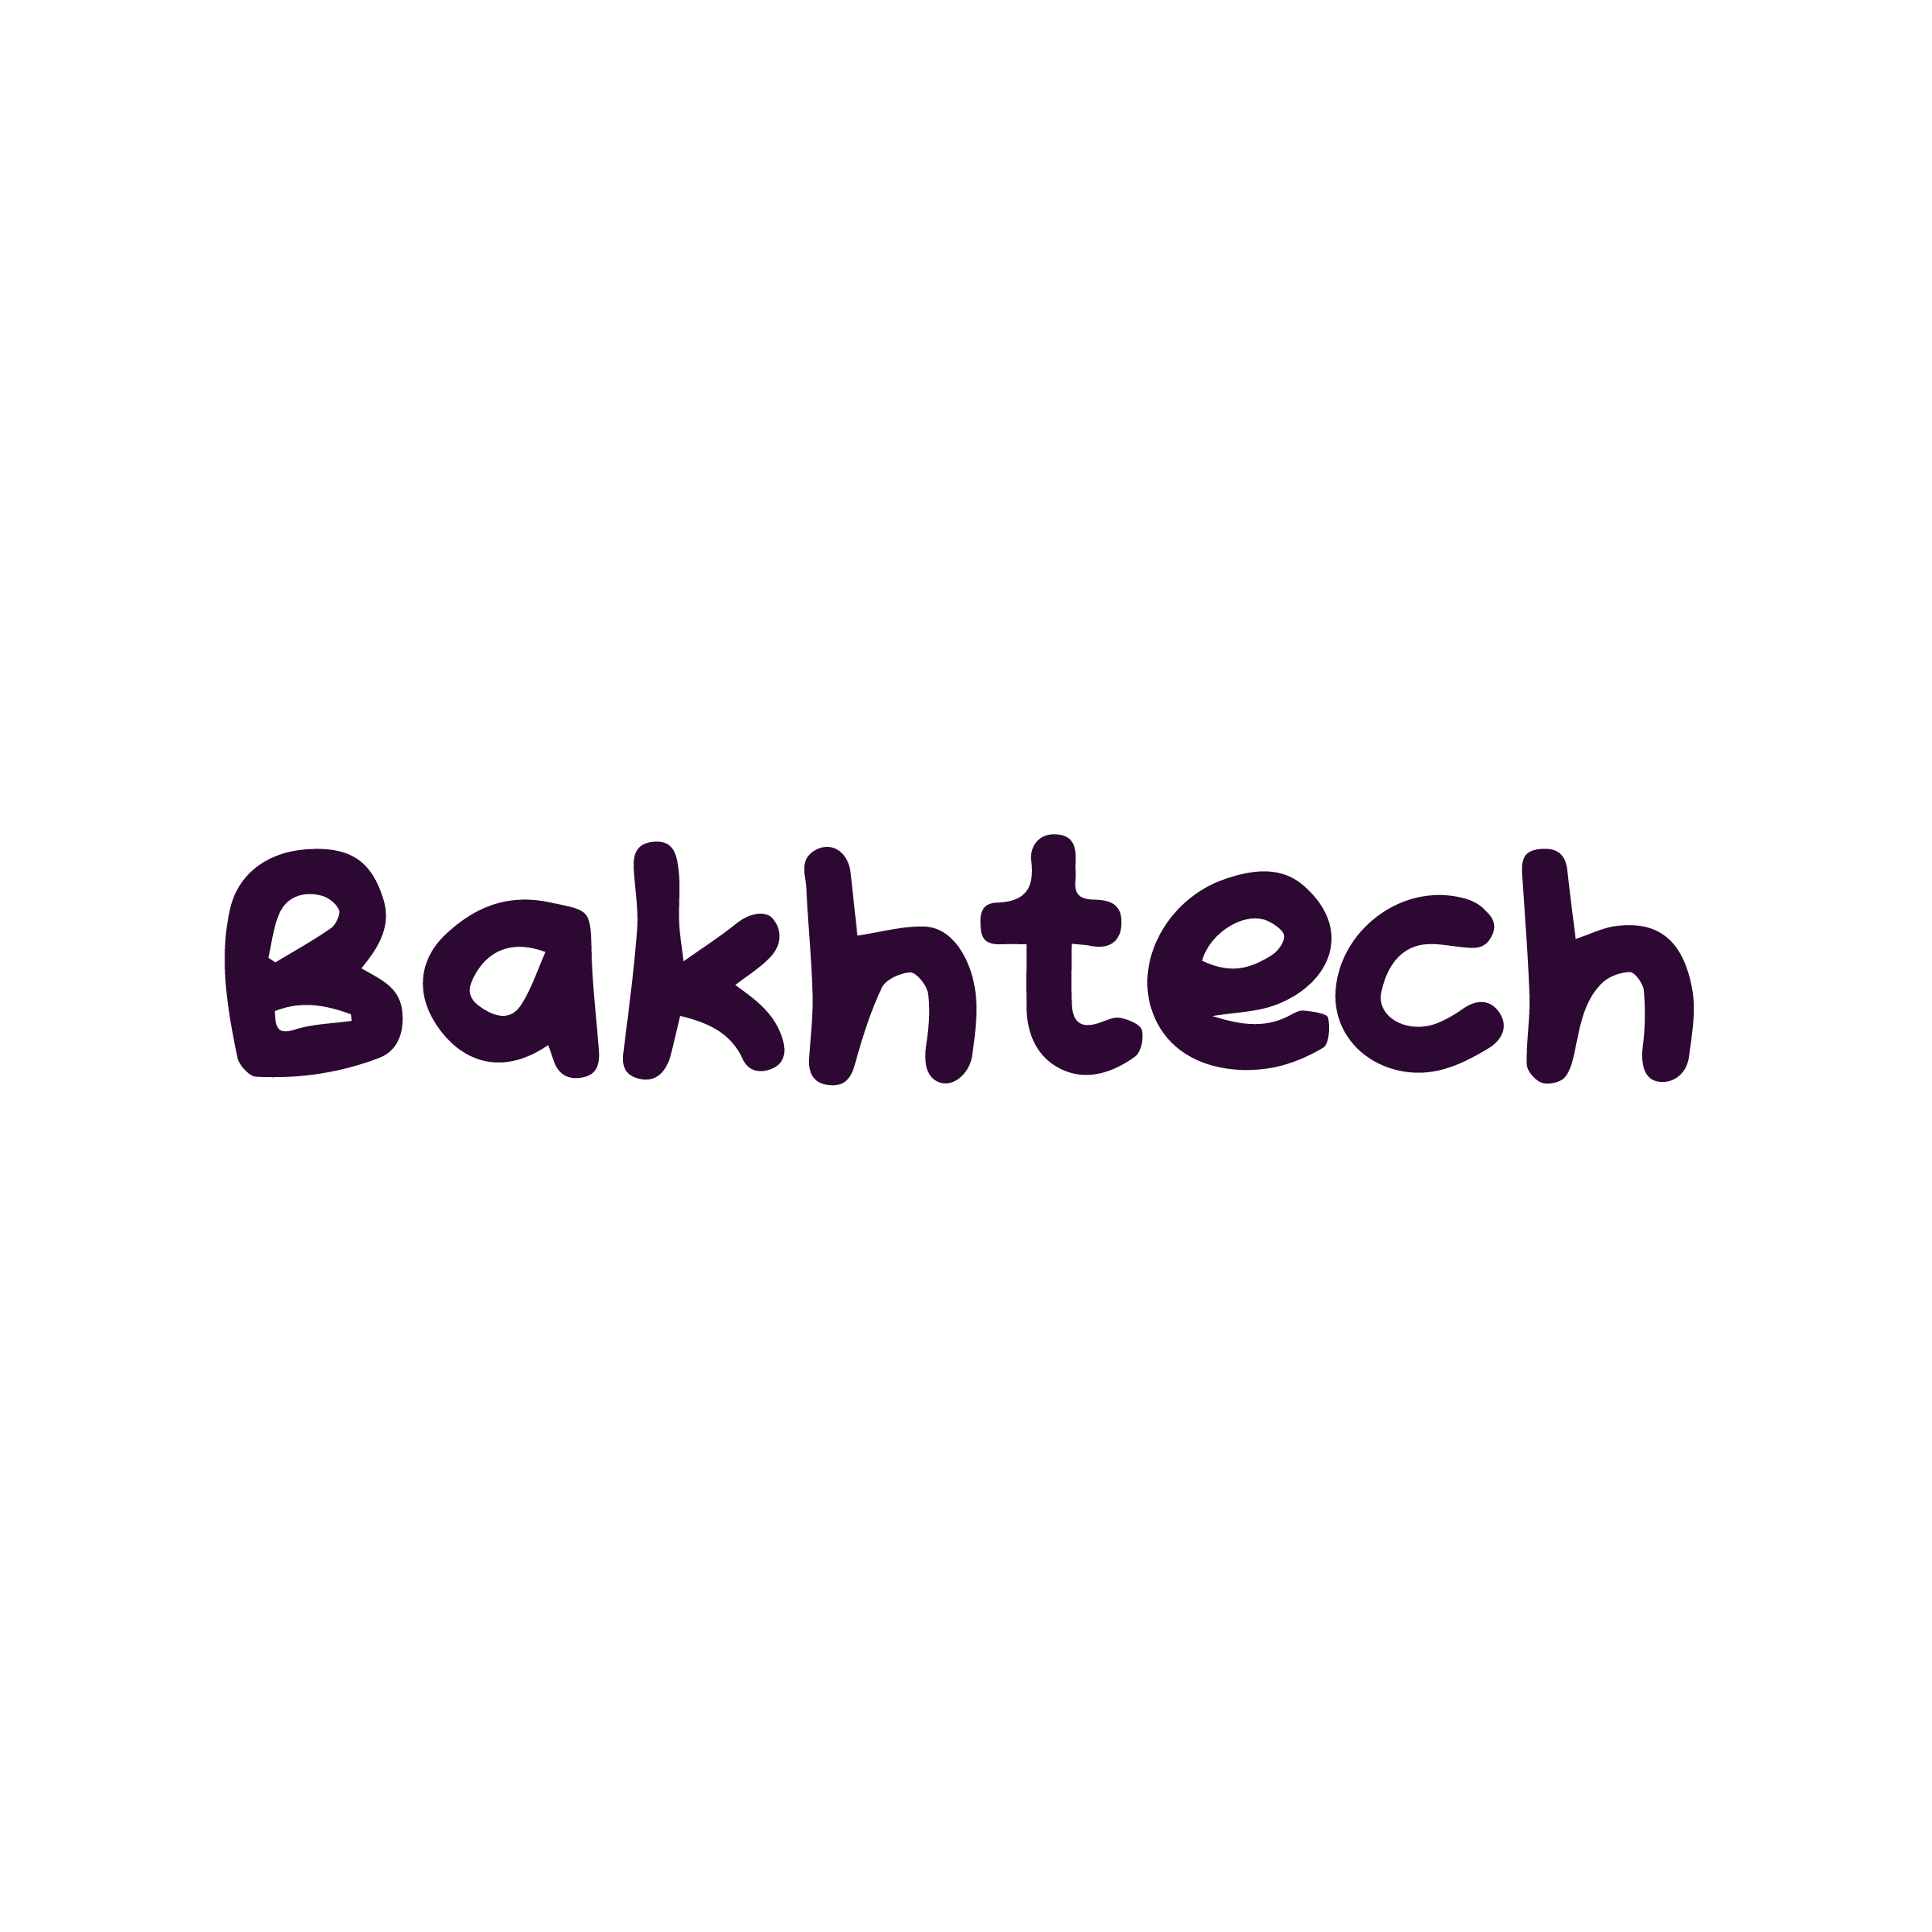 Bakhtech